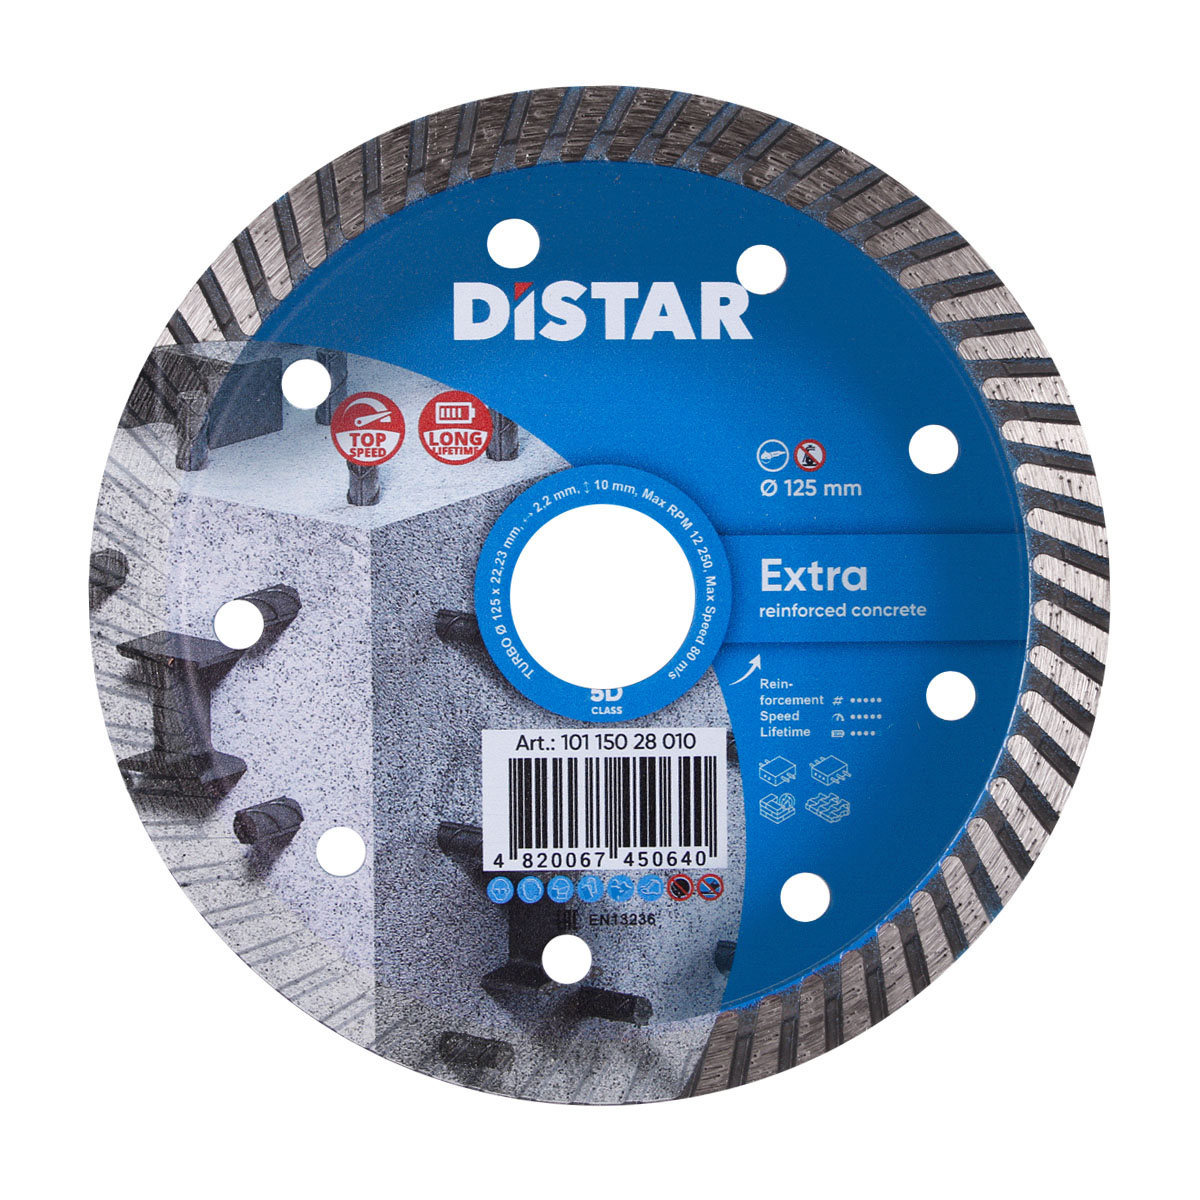 Диск алмазный отрезной по бетону для УШМ Distar 1A1R Turbo 125 мм Extra 5D диск trio diamond turbo глубокорез tp152 алмазный отрезной 125x22 23mm